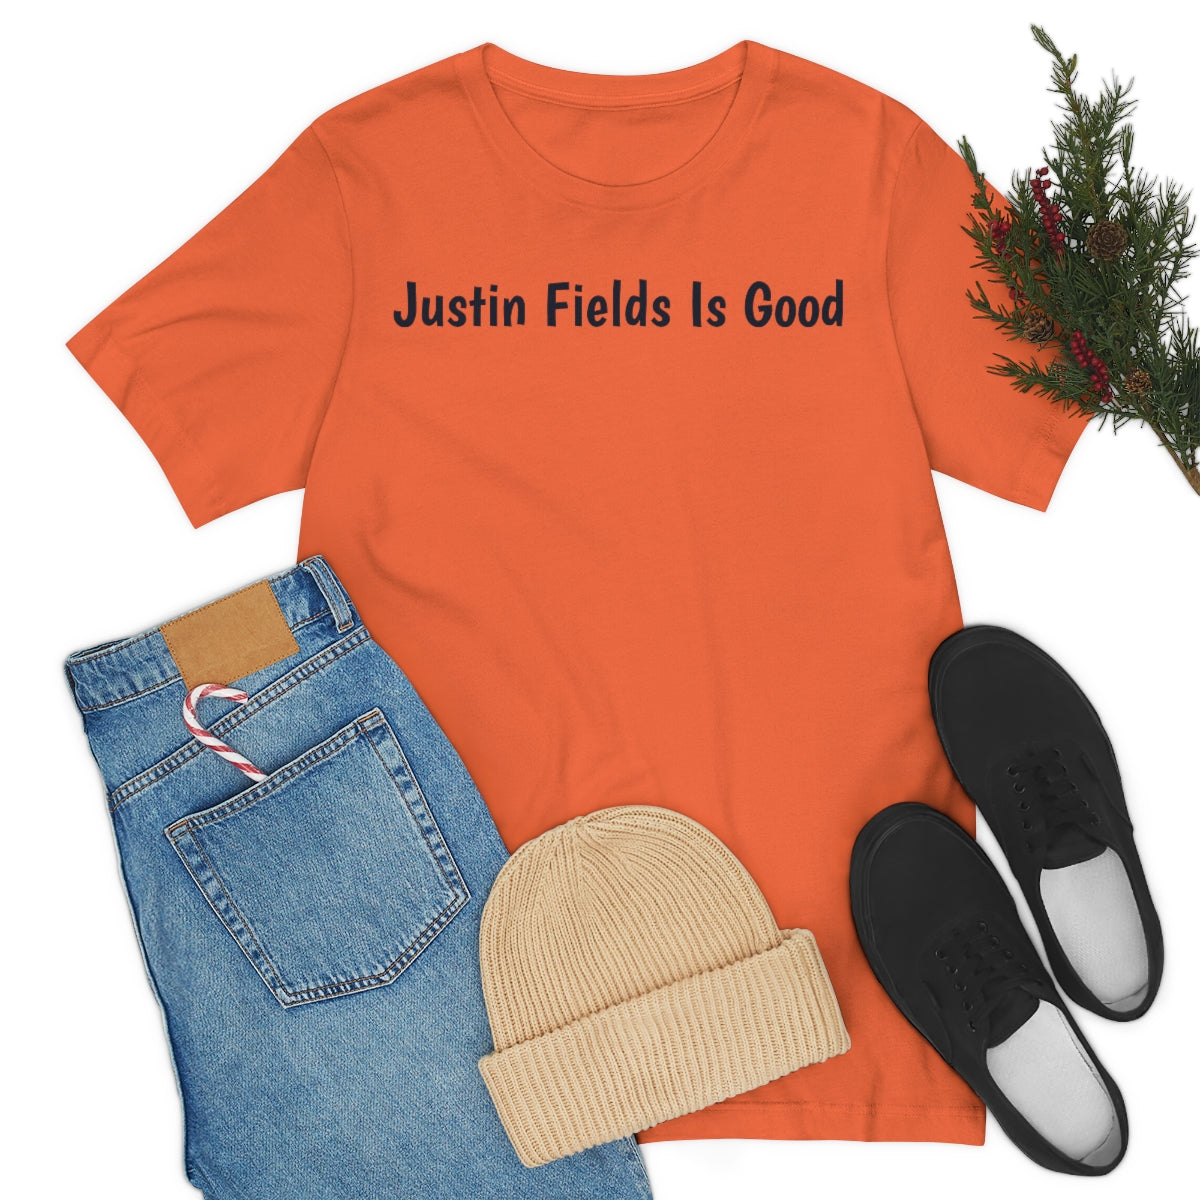 Justin Fields Is Good Tee - IsGoodBrand